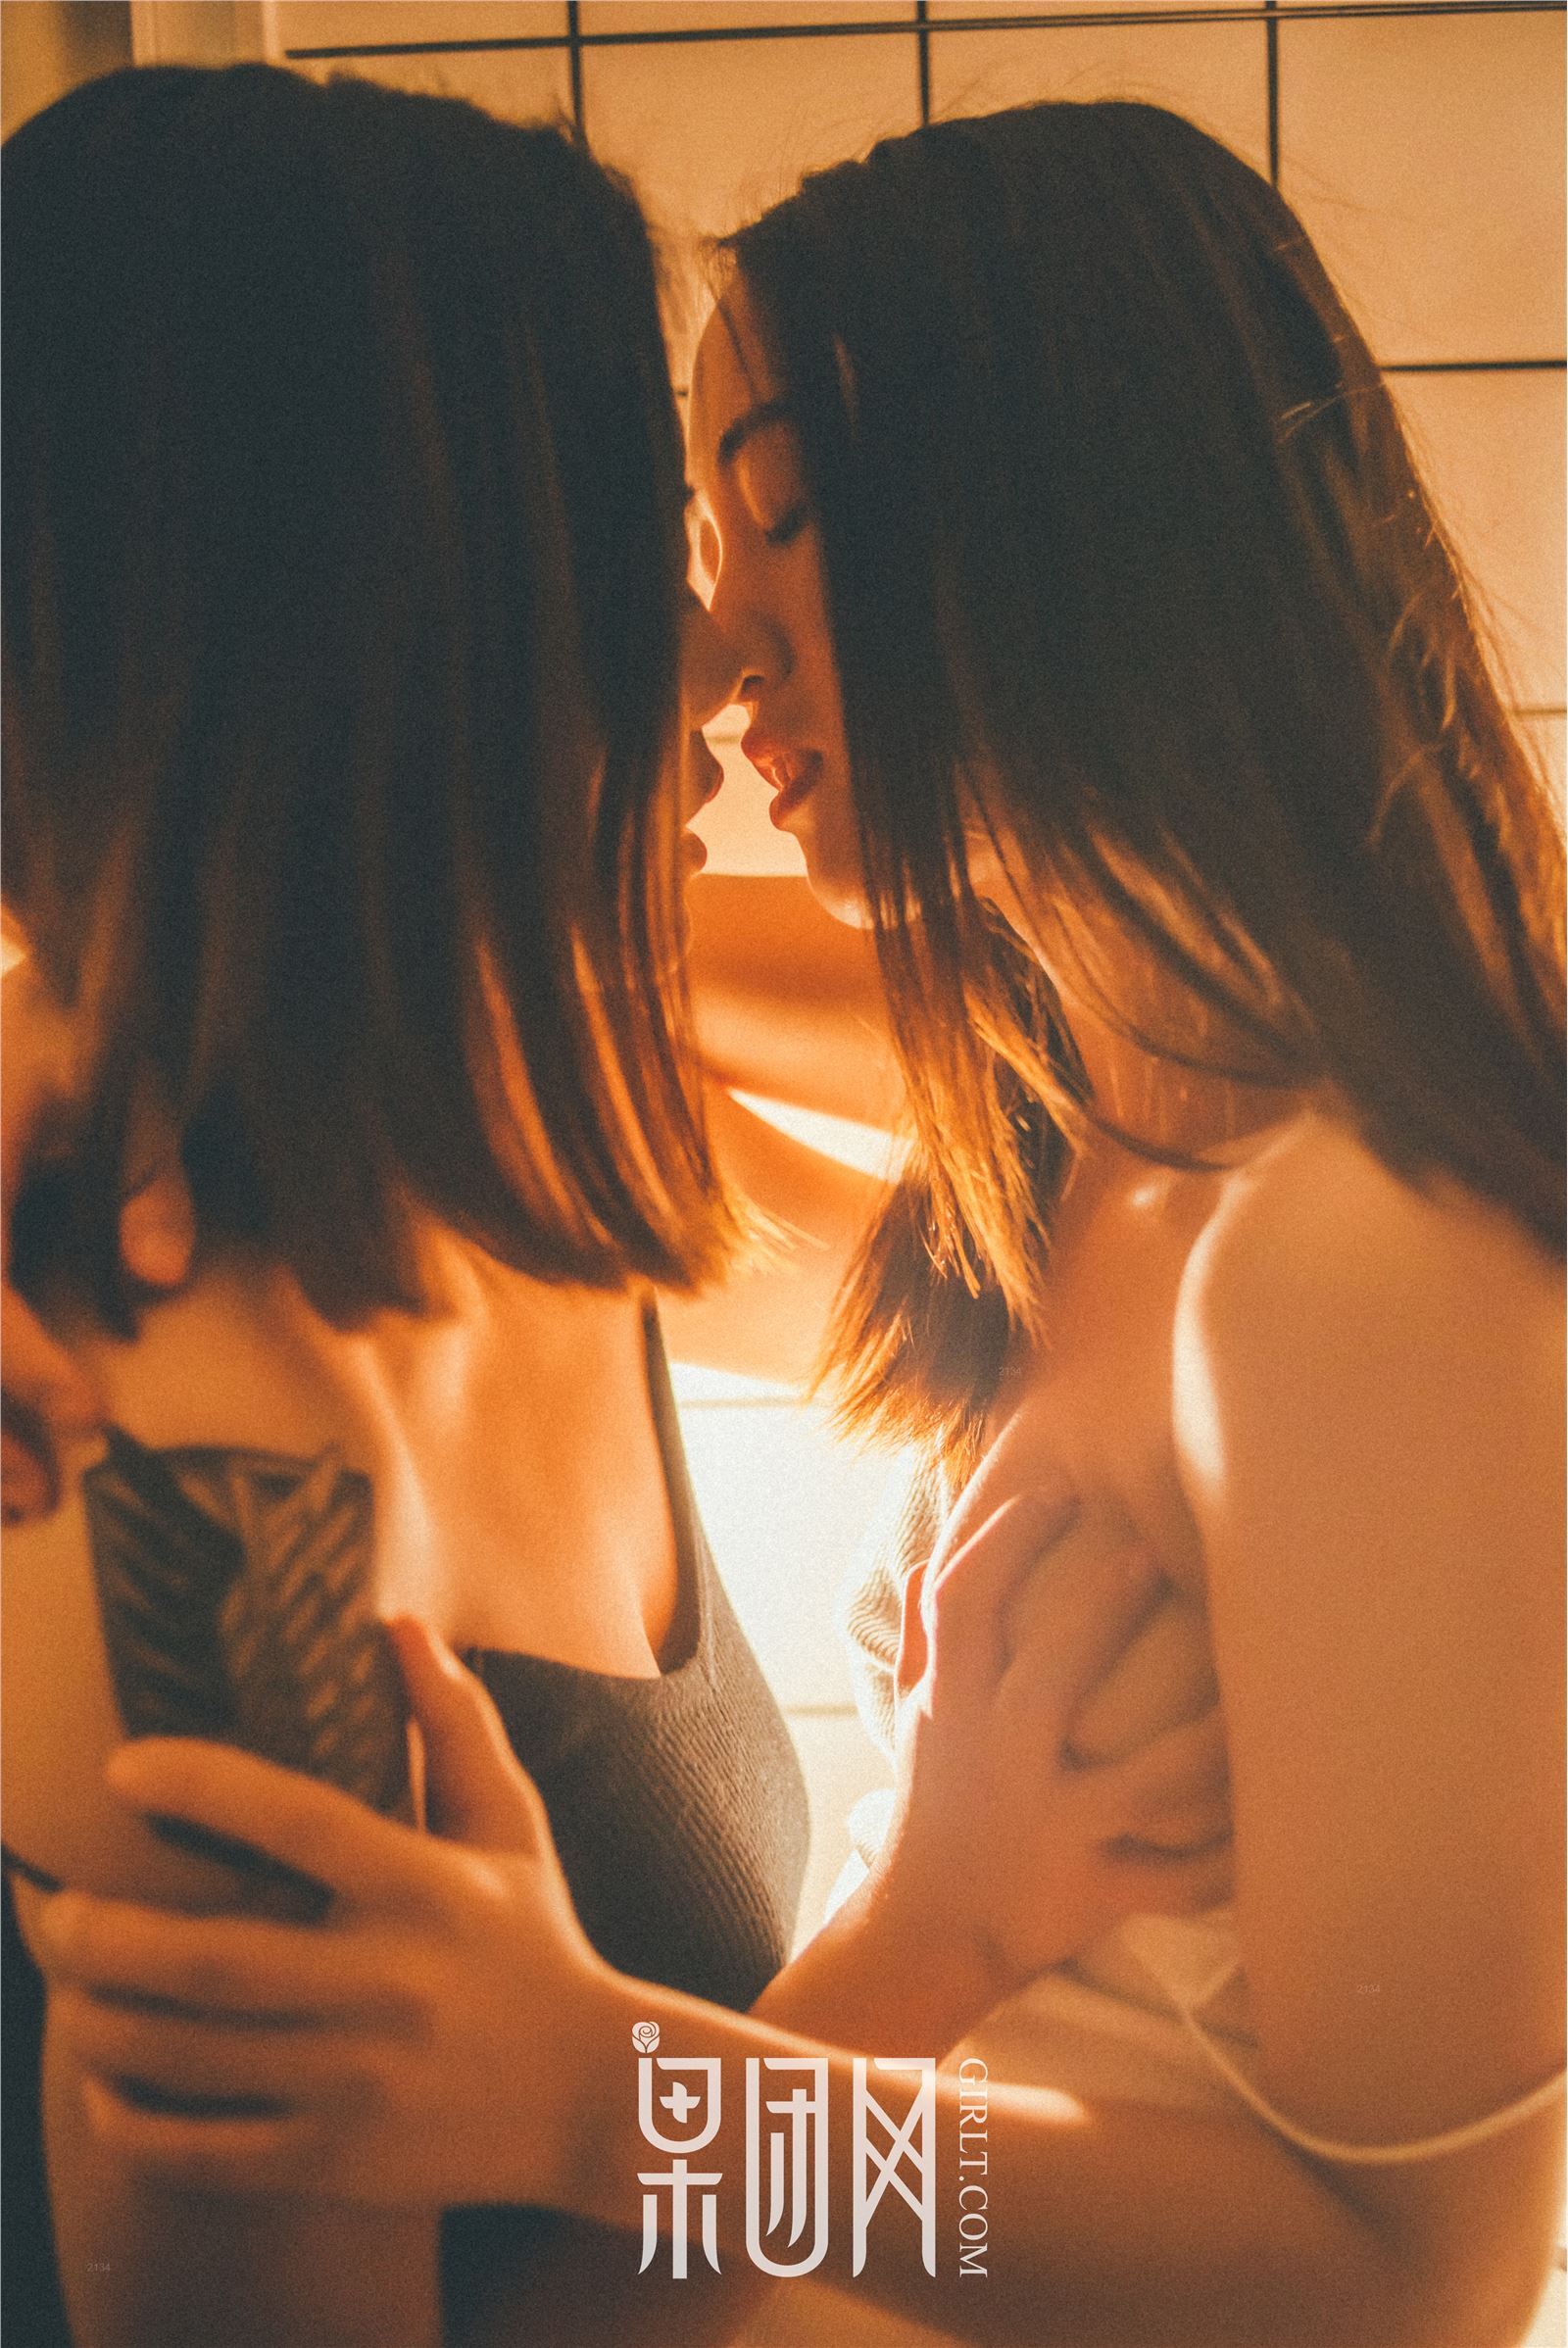 [Girlt]果团人像摄影写真 2017.12.30 No.114 爱过一场难以承受的诺言